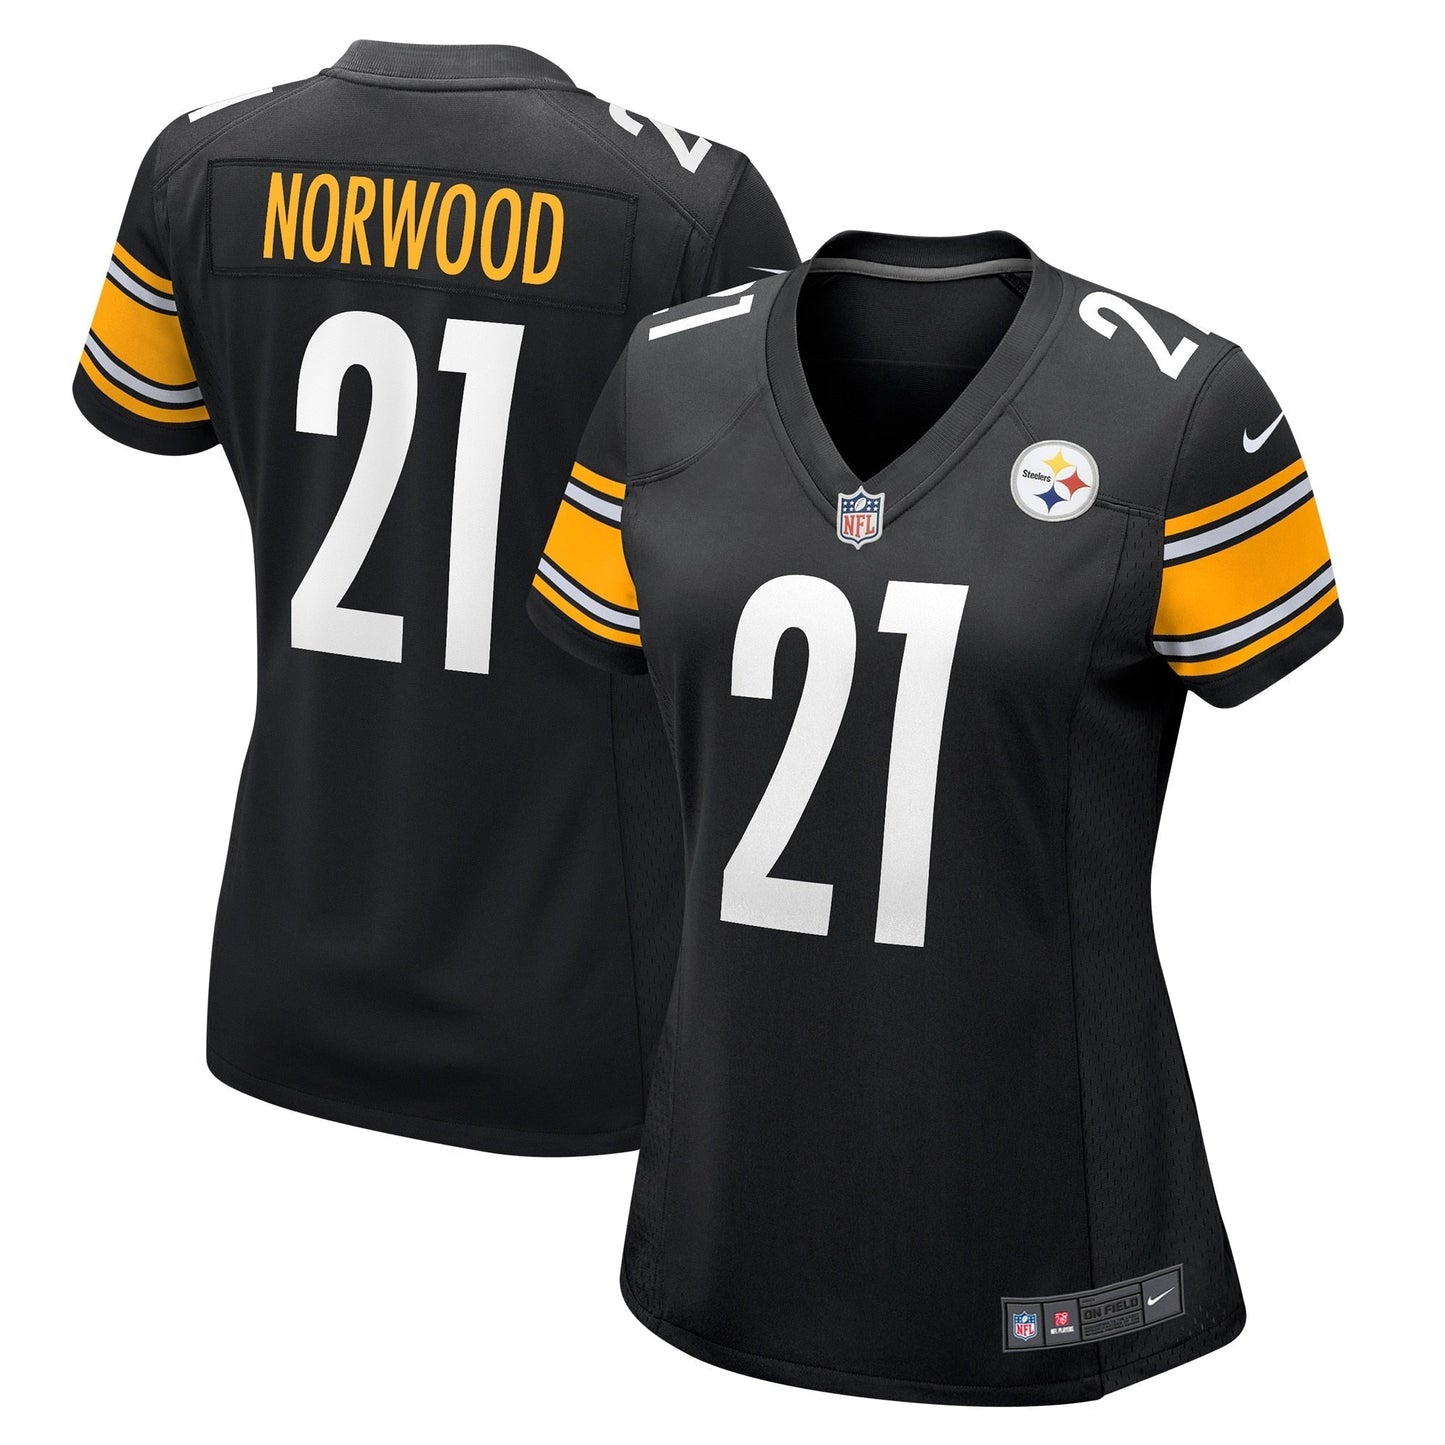 Women's Nike Tre Norwood Black Pittsburgh Steelers Game Jersey